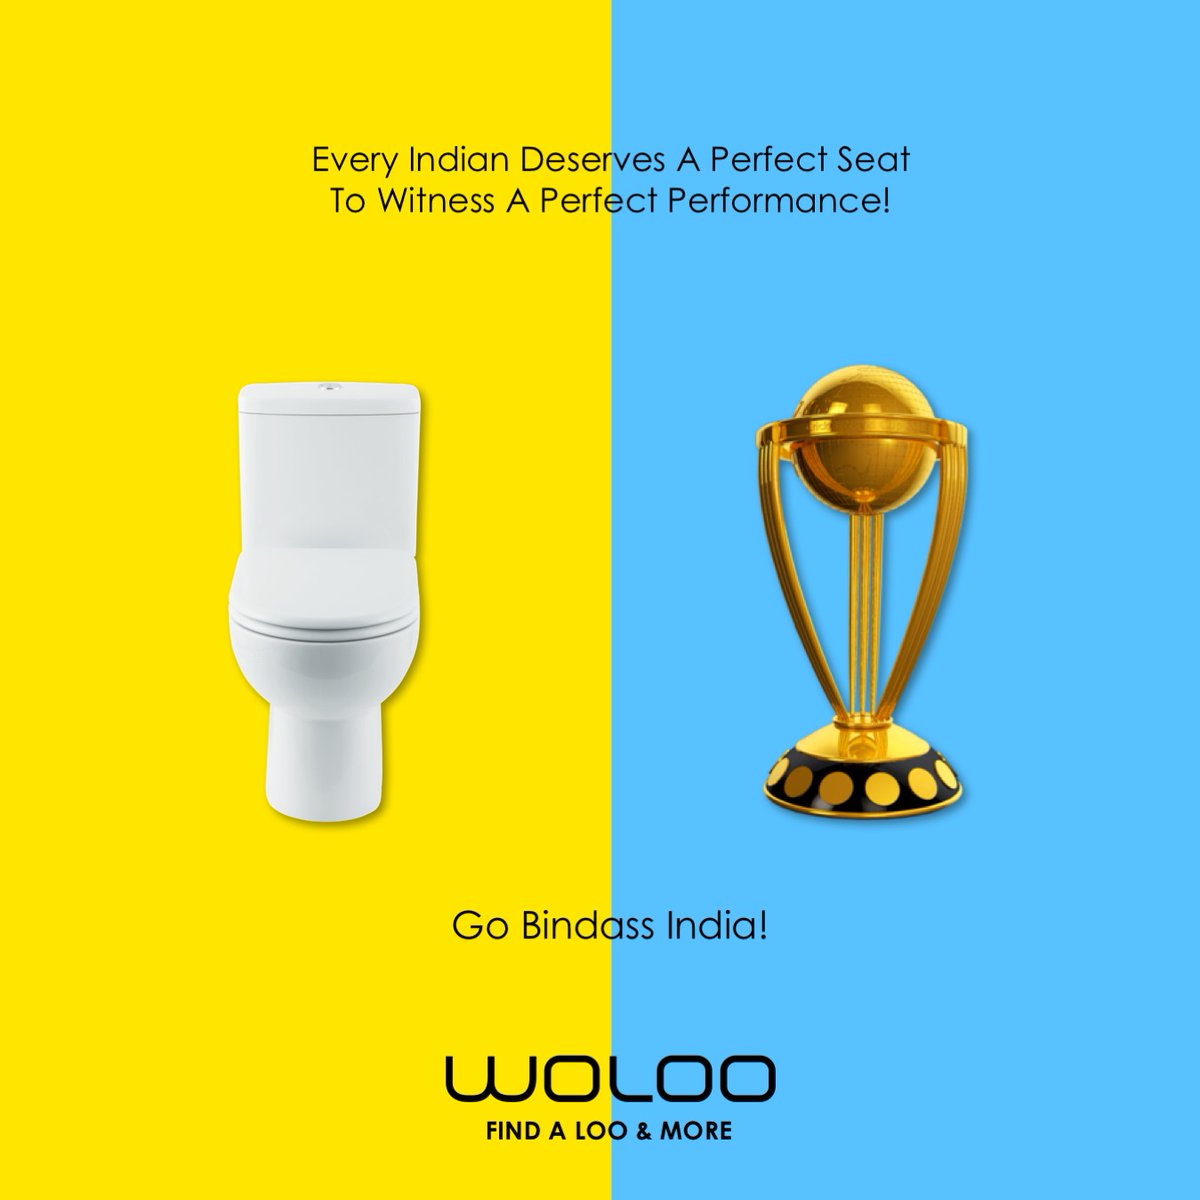 Go team India!!! You do good boys!!! You deserve it!!!
.
.
#GoBindaas #WolooHaiNa #IndVsAus #Icc#TeamIndia #TeamAustralia #worldcup2023
#WorldCupChamps #CWC23Final #ChampionsClash #StadiumRoars #CricketNation #FinalsFeast #SixesAndWickets #WCThrills